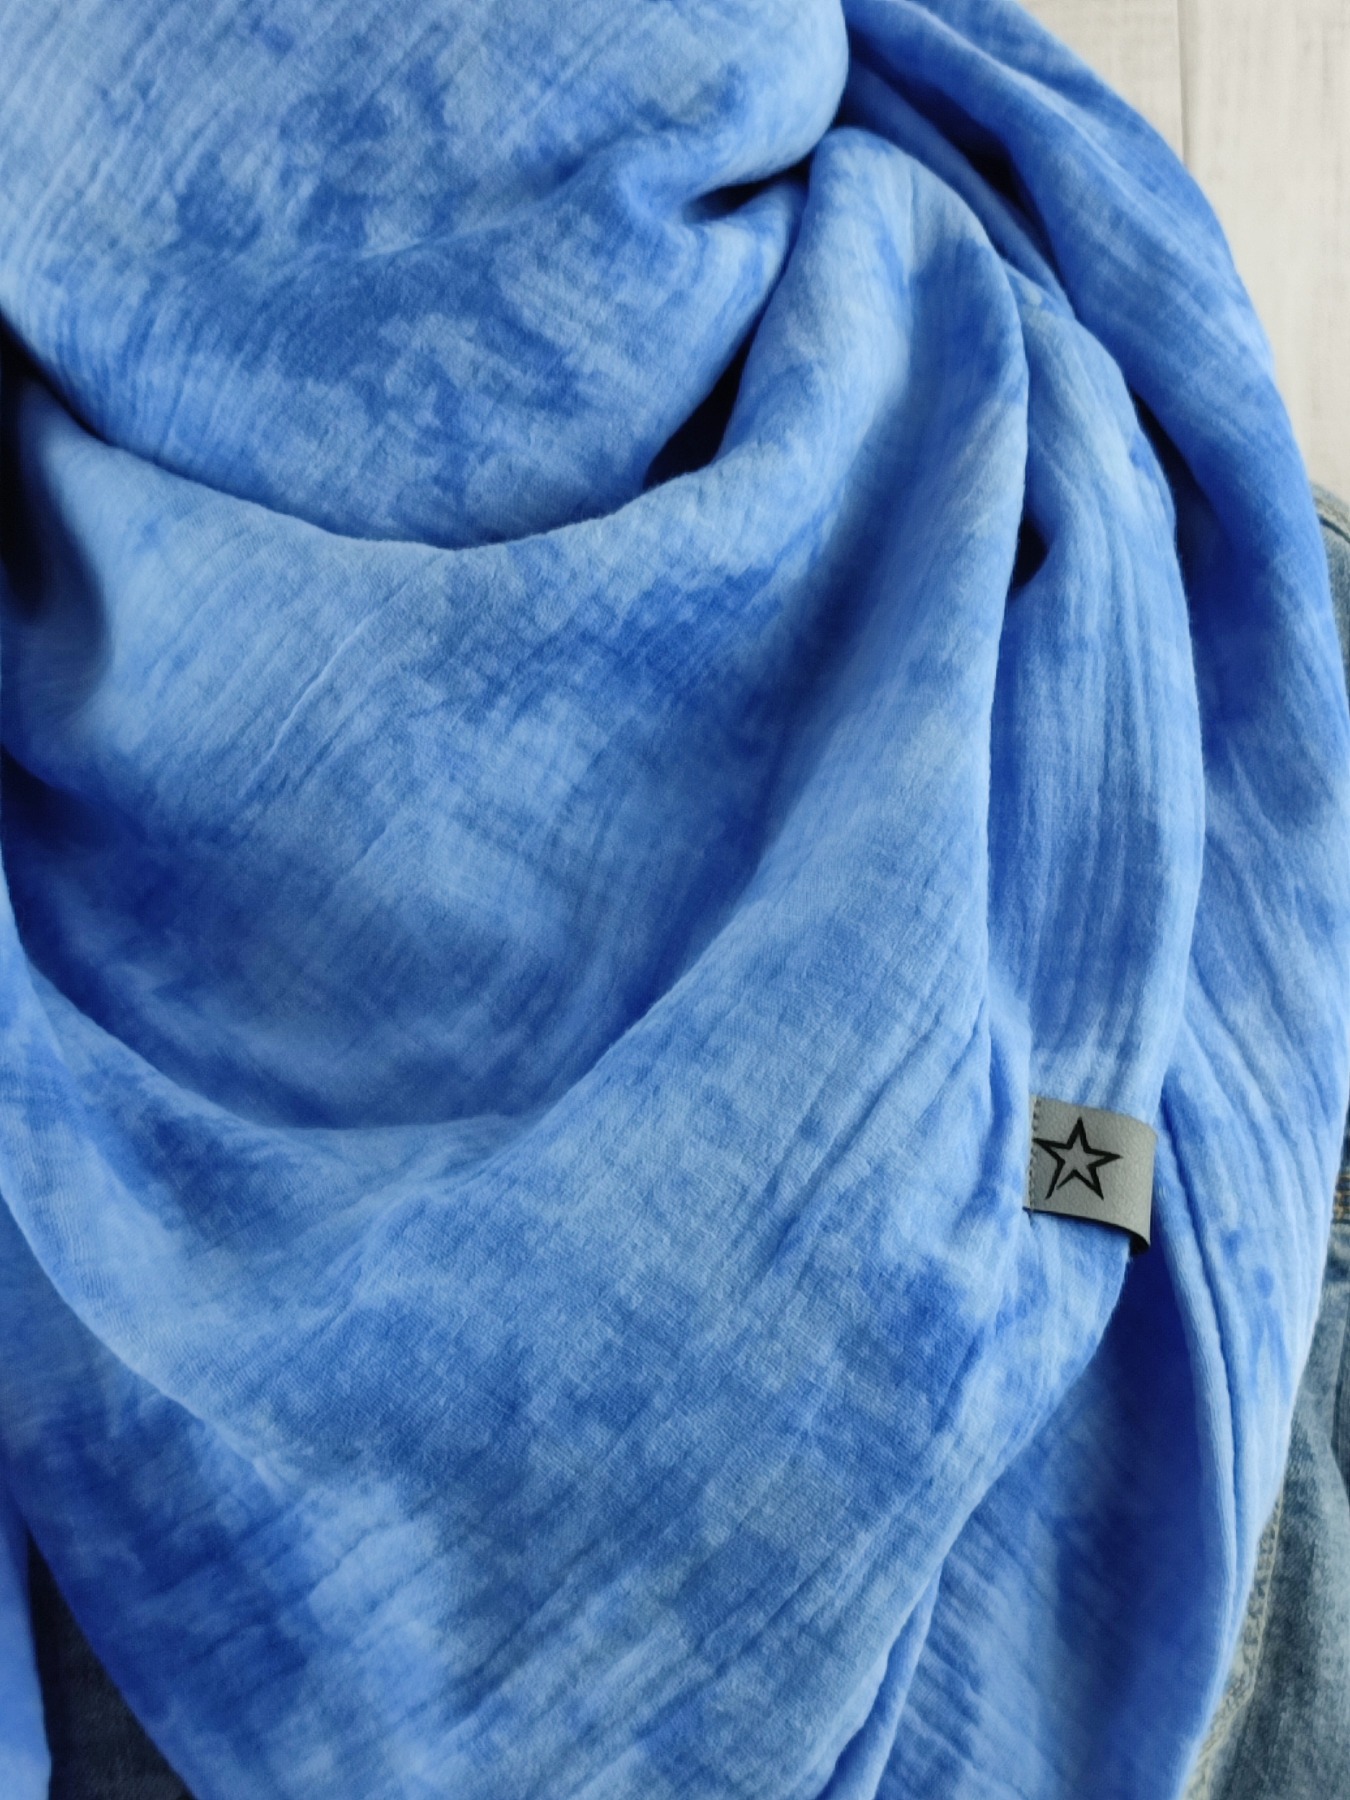 Tuch Dreieckstuch Musselin Damen Schal Batik blau royalblau XXL Tuch aus Baumwolle Mamatuch 2